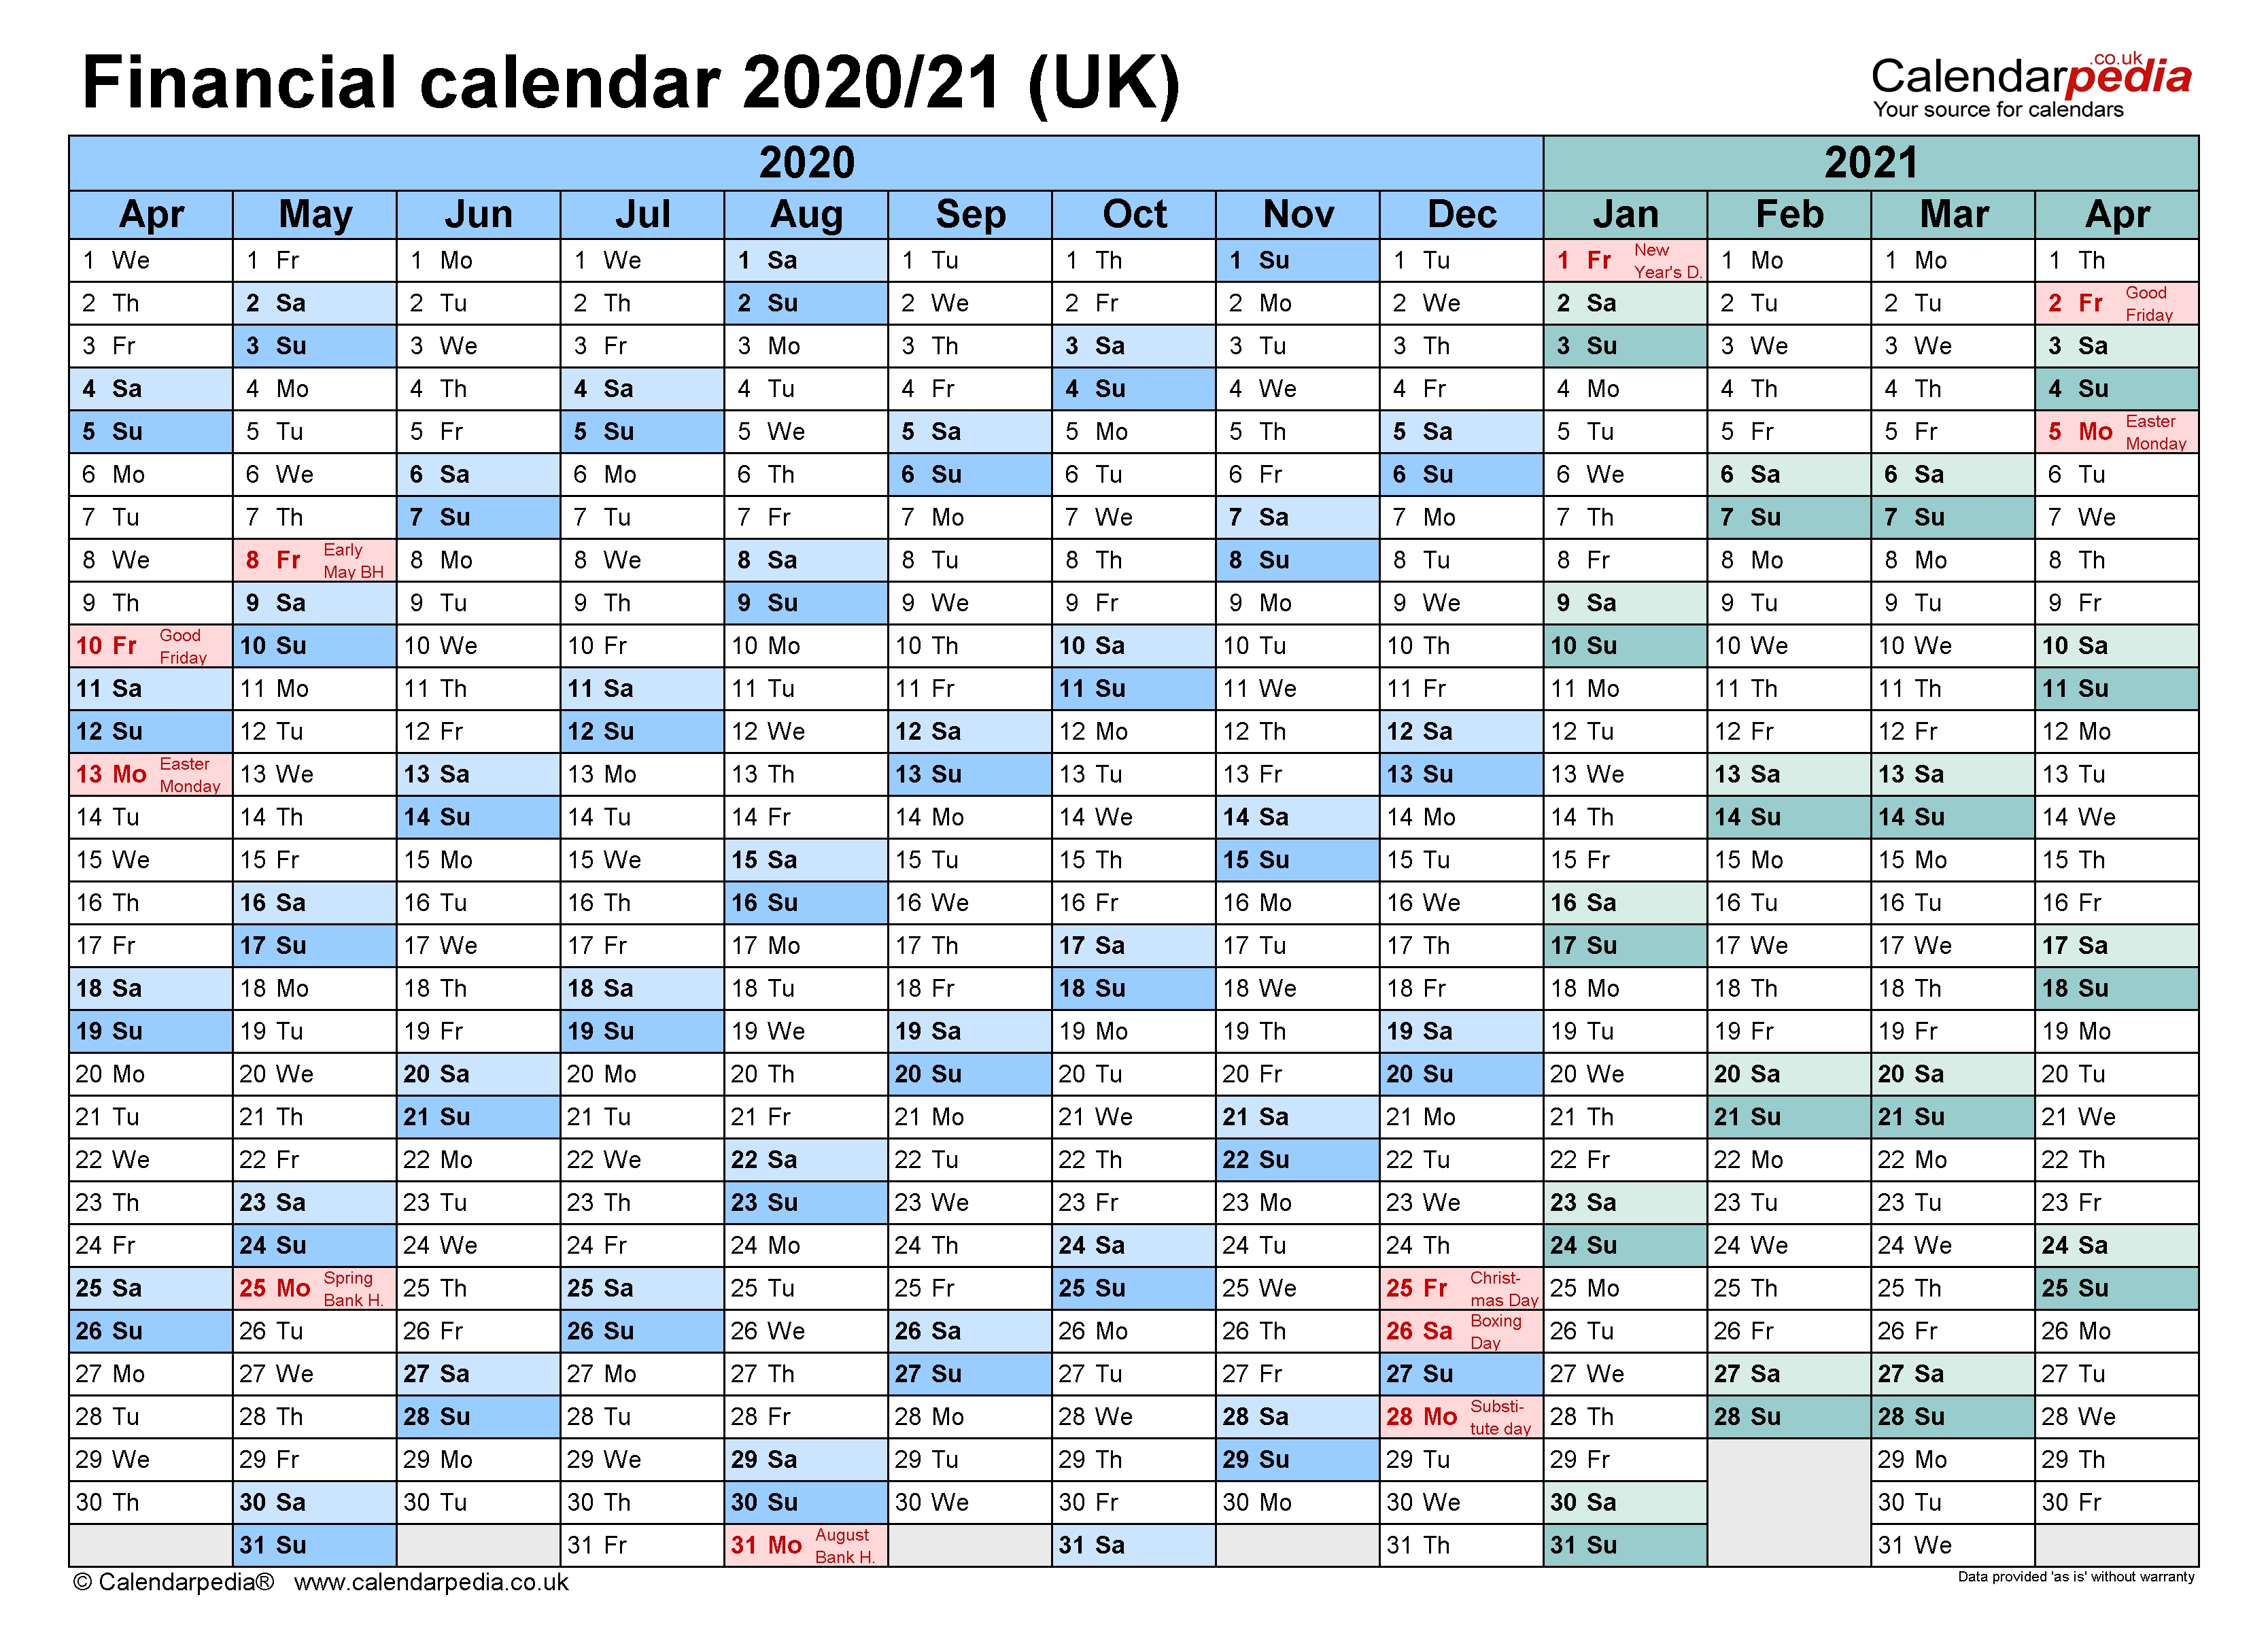 Financial Calendars 2020/21 (Uk) In Pdf Format pertaining to Financial Year Week Numbers 2020